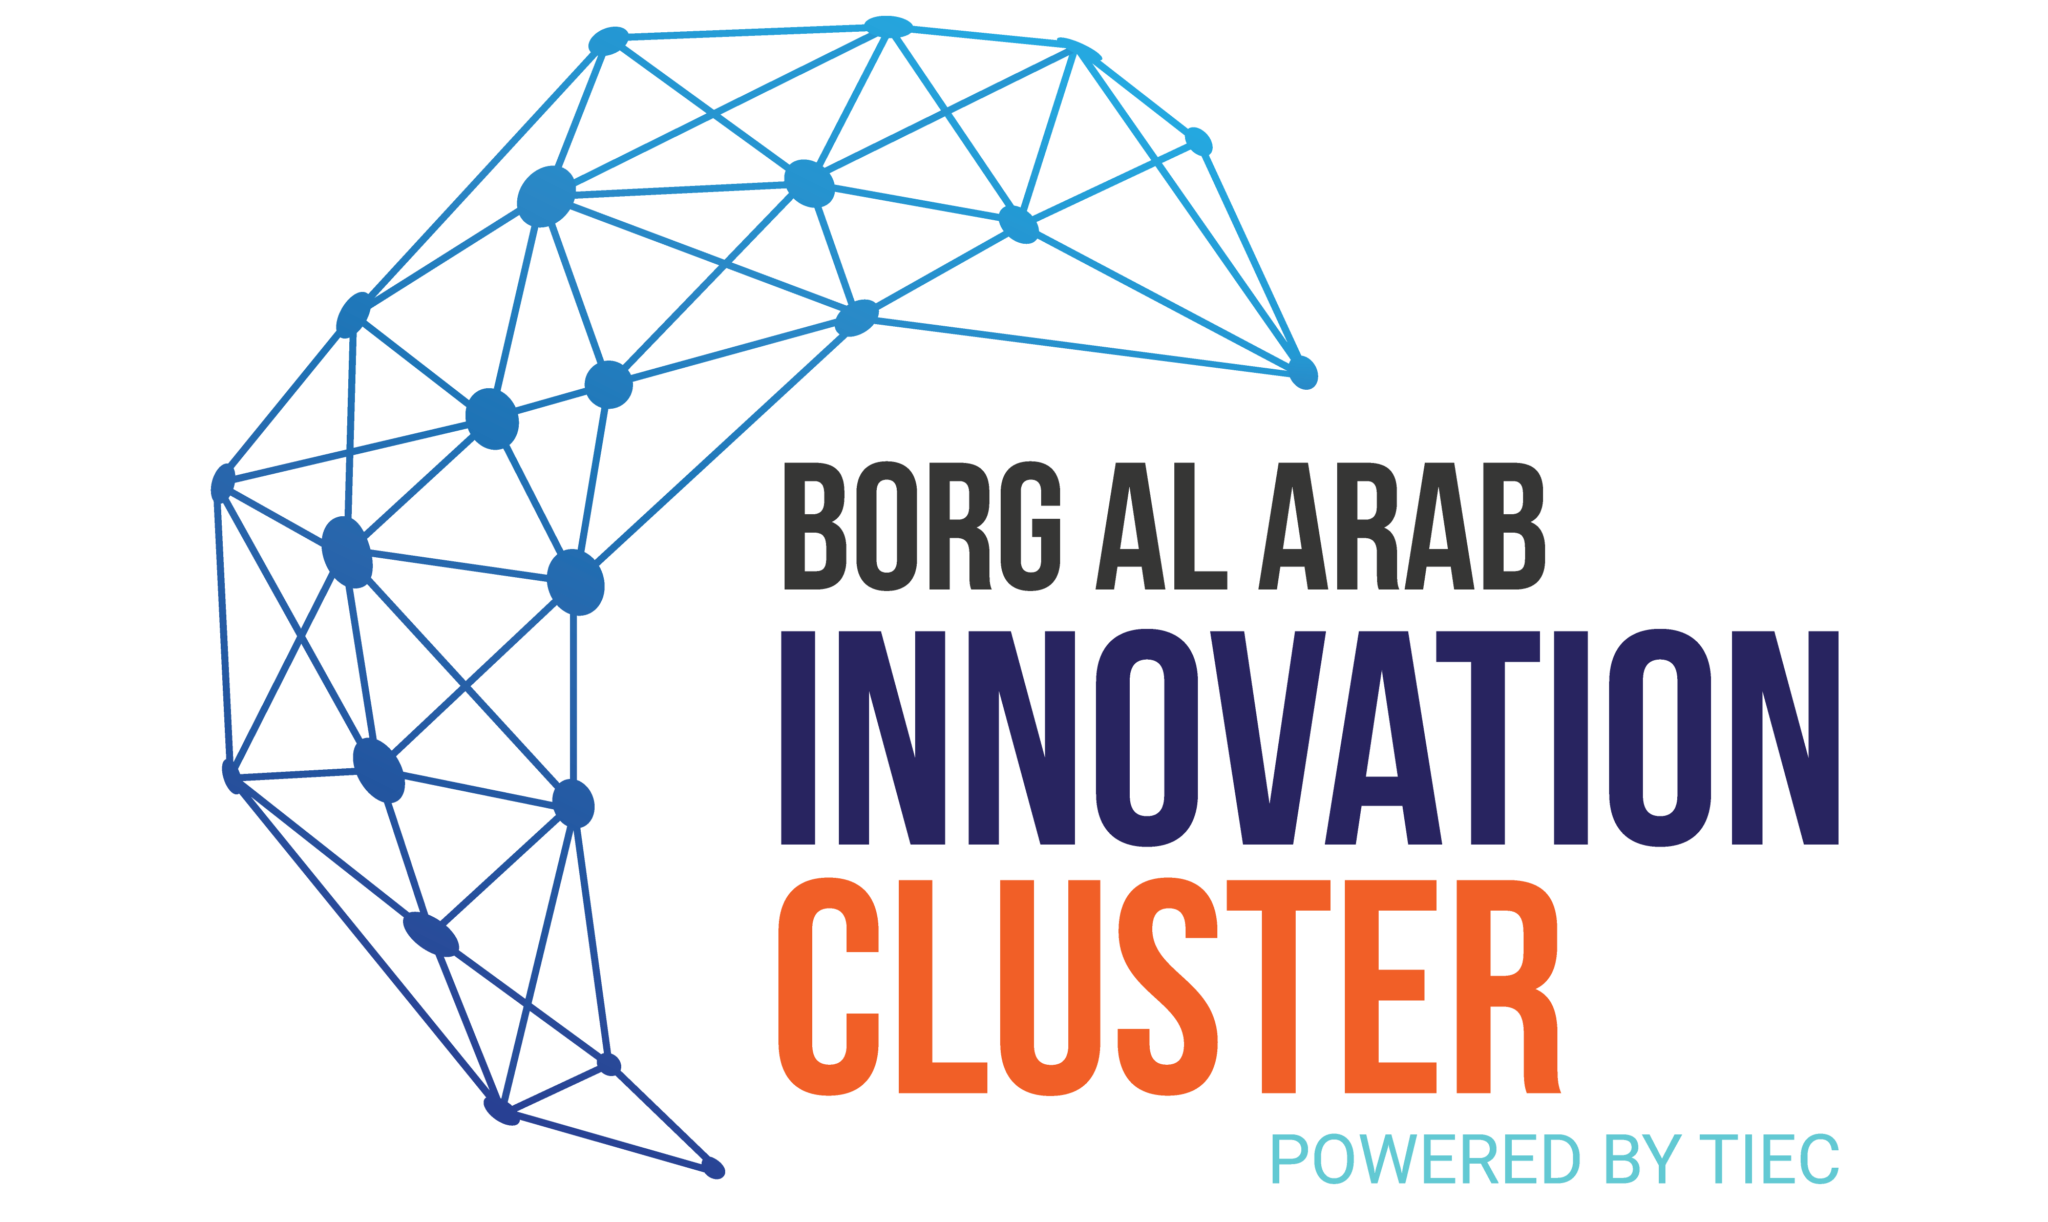 Borg elArab ud-logo